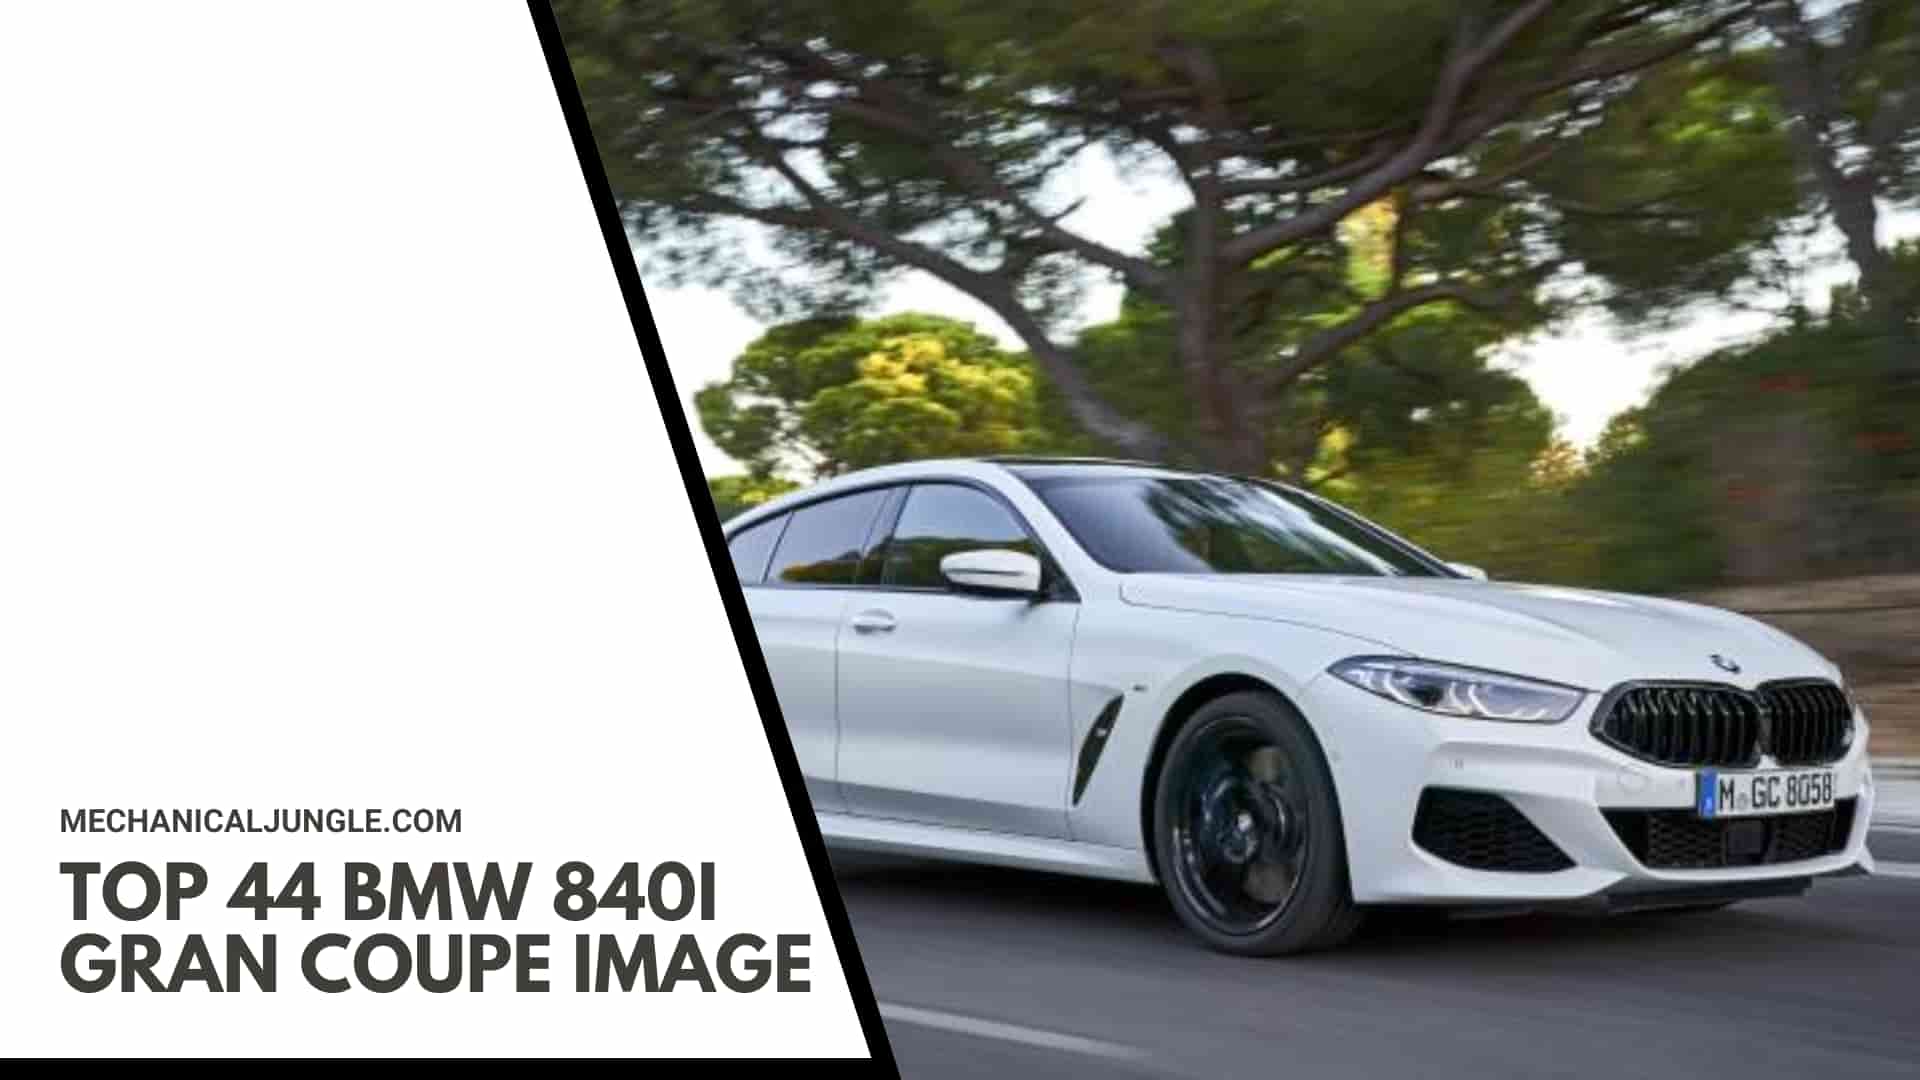 Top 44 BMW 840i Gran Coupe Image